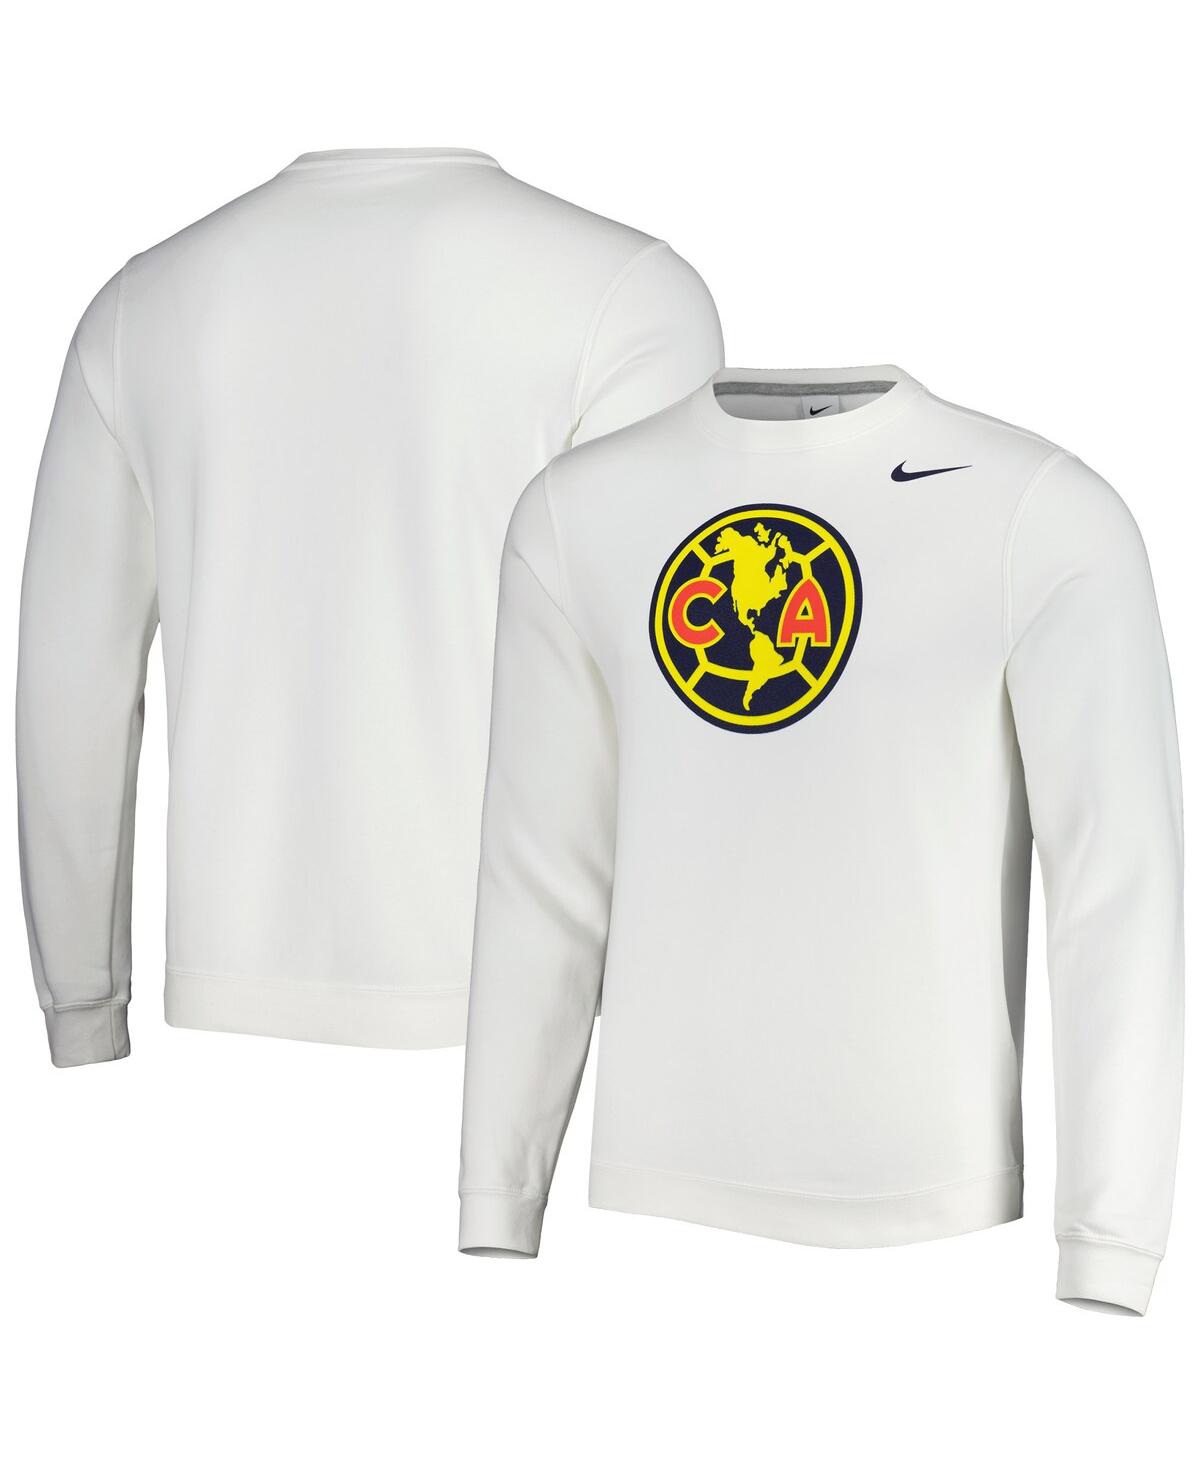 Shop Nike Men's  White Club America Fleece Pullover Sweatshirt